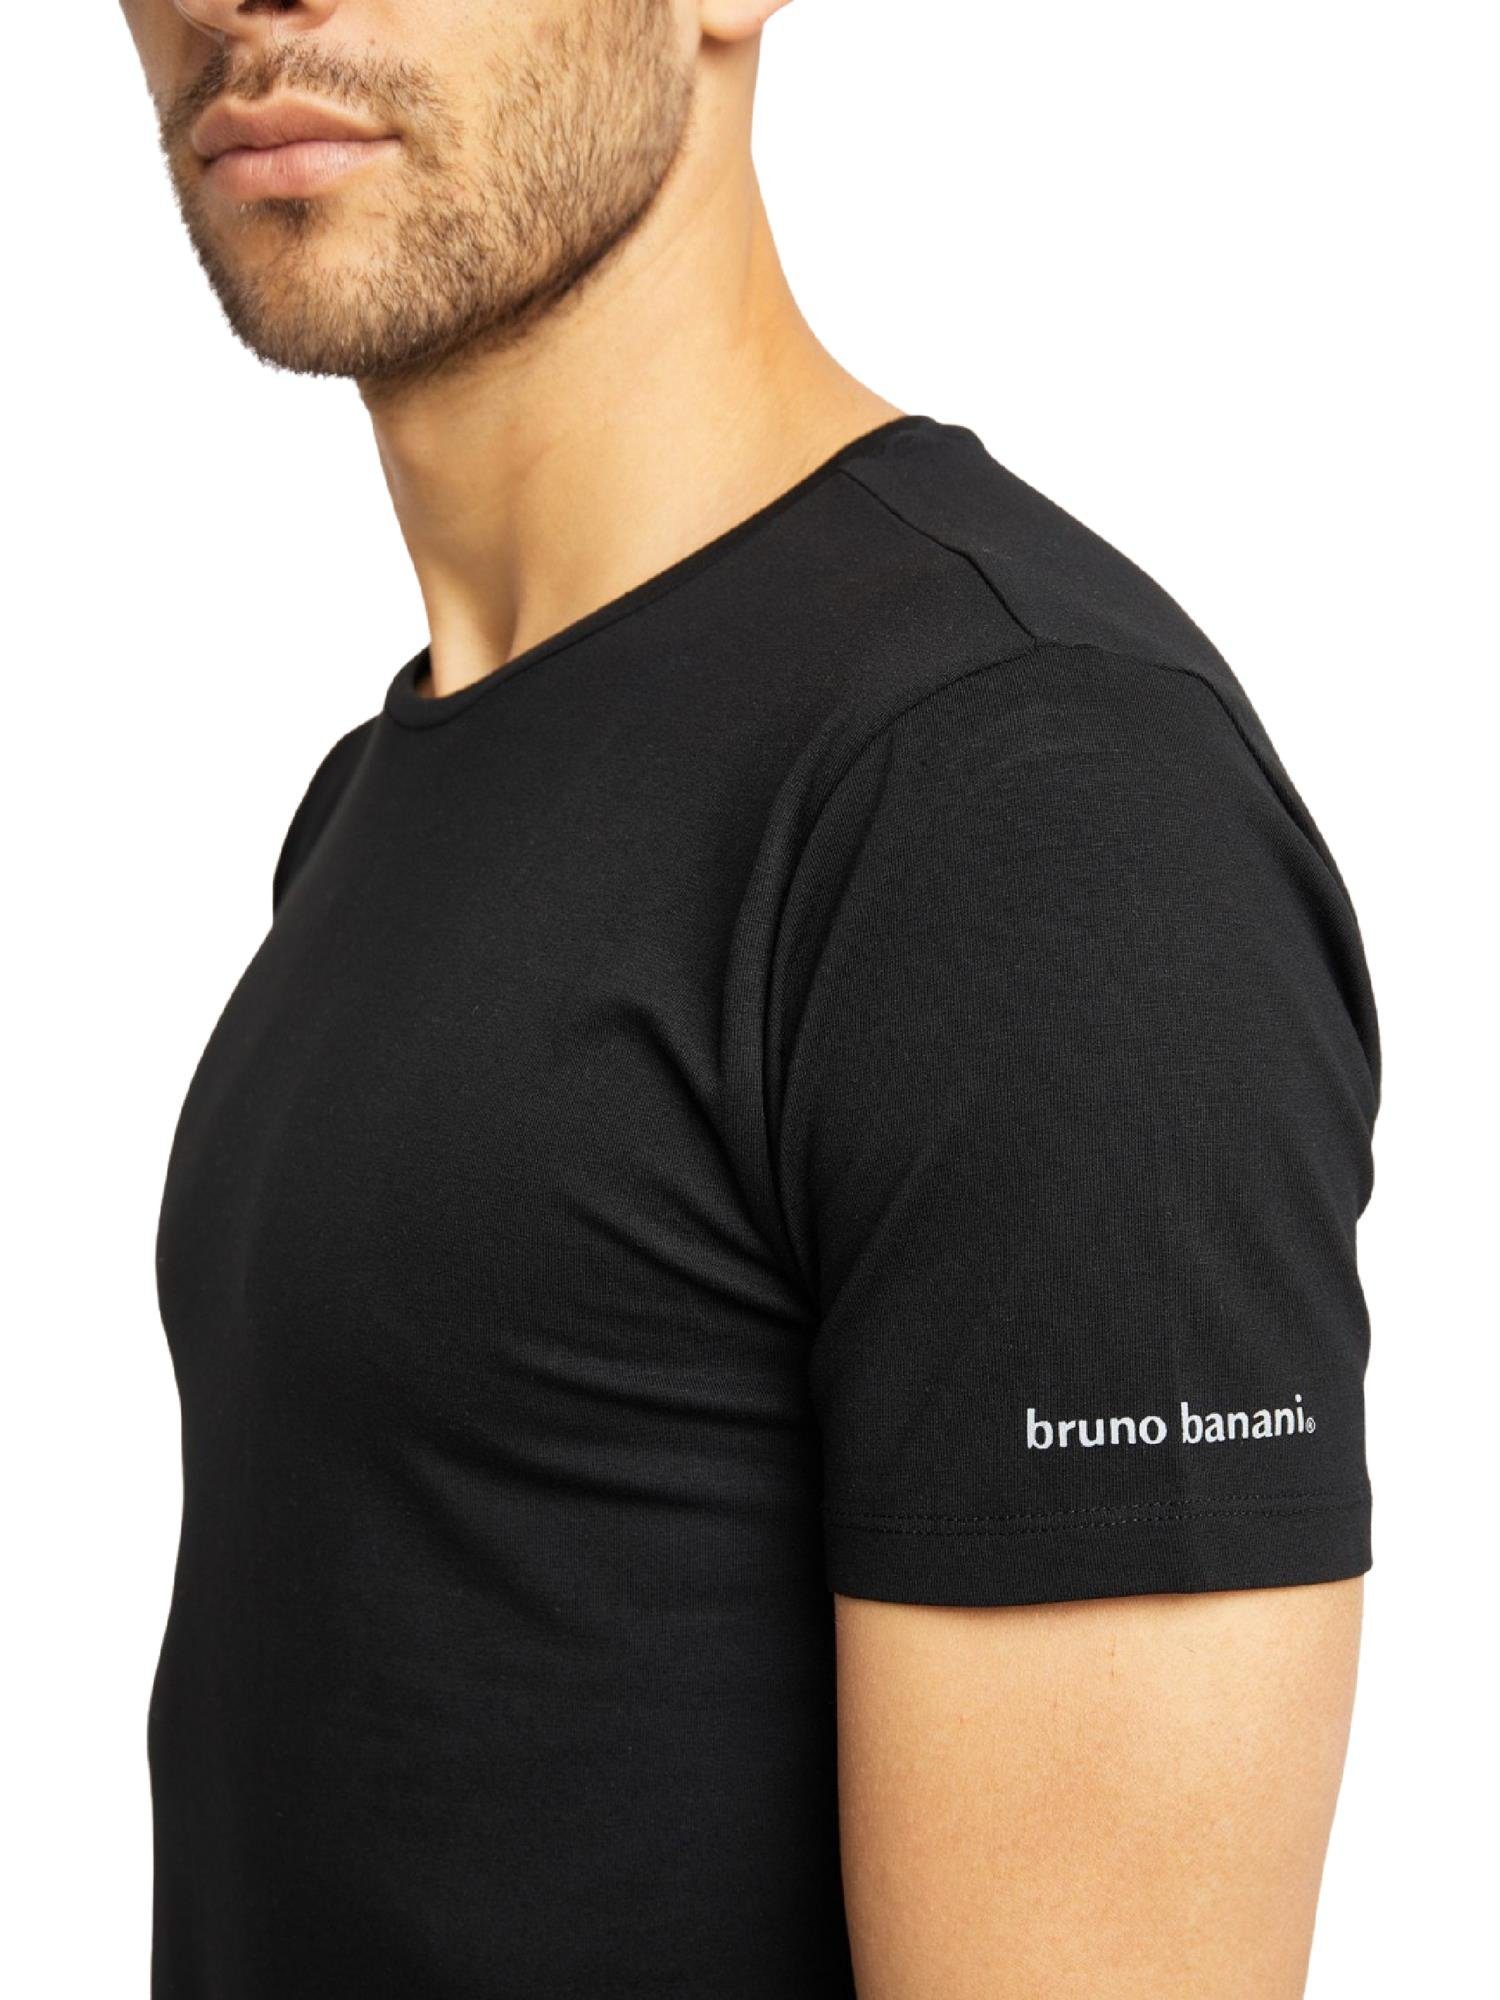 Bruno Banani T-Shirt Schwarz HENDERSON